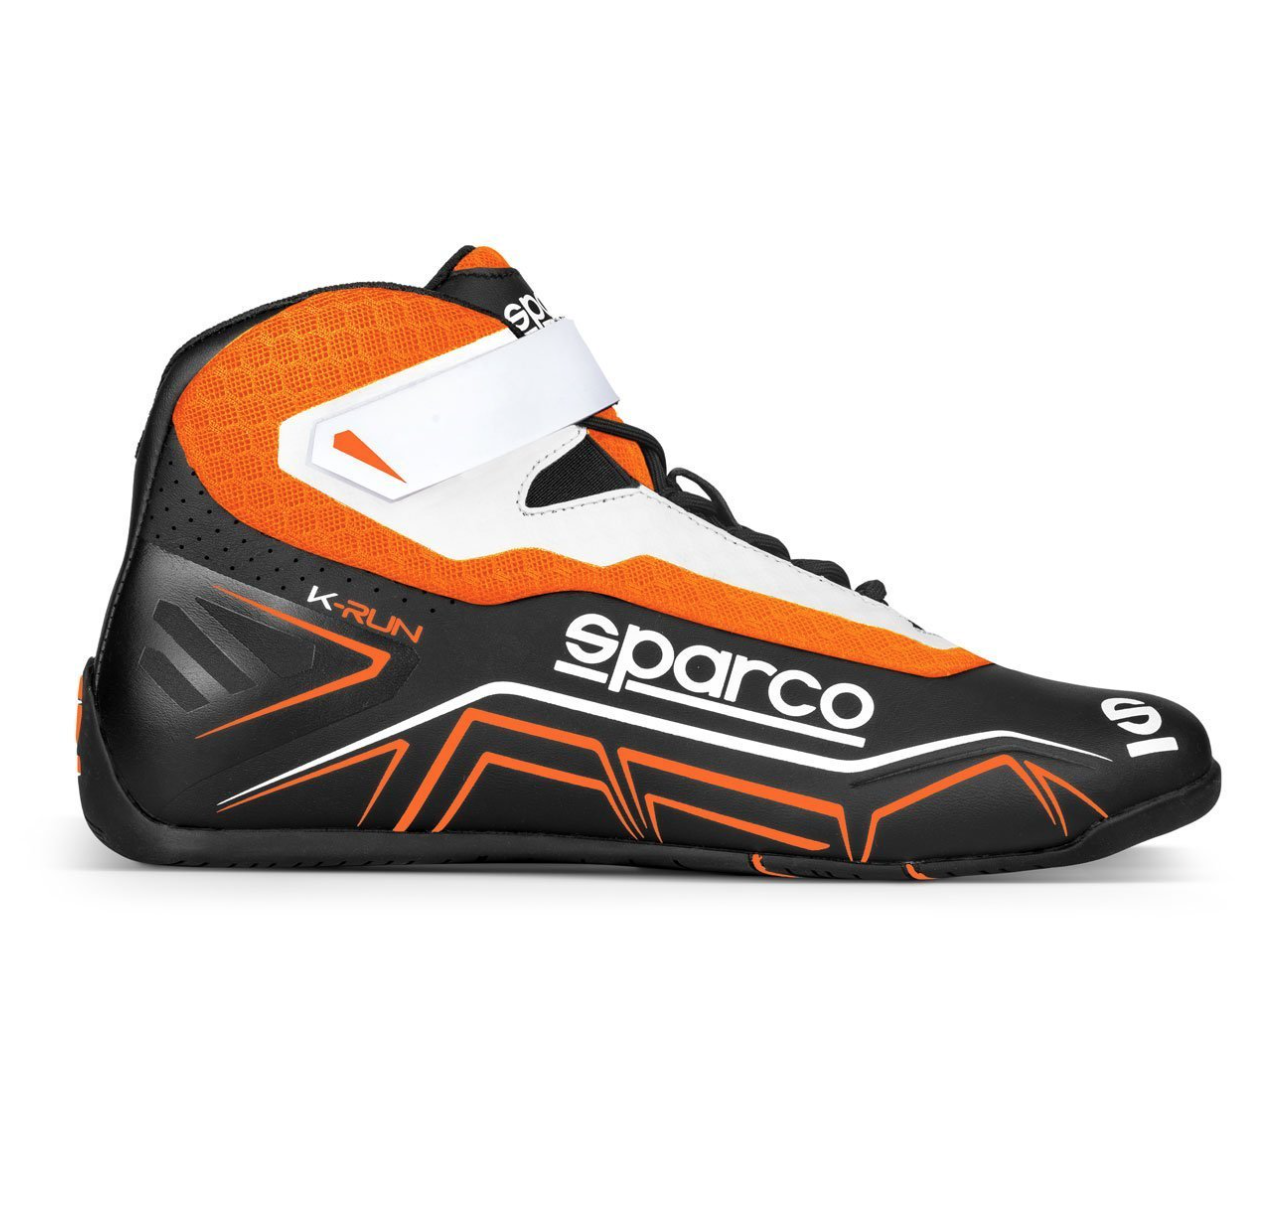 Botas para karting Sparco K-Run, preto/laranja, tamanho 42